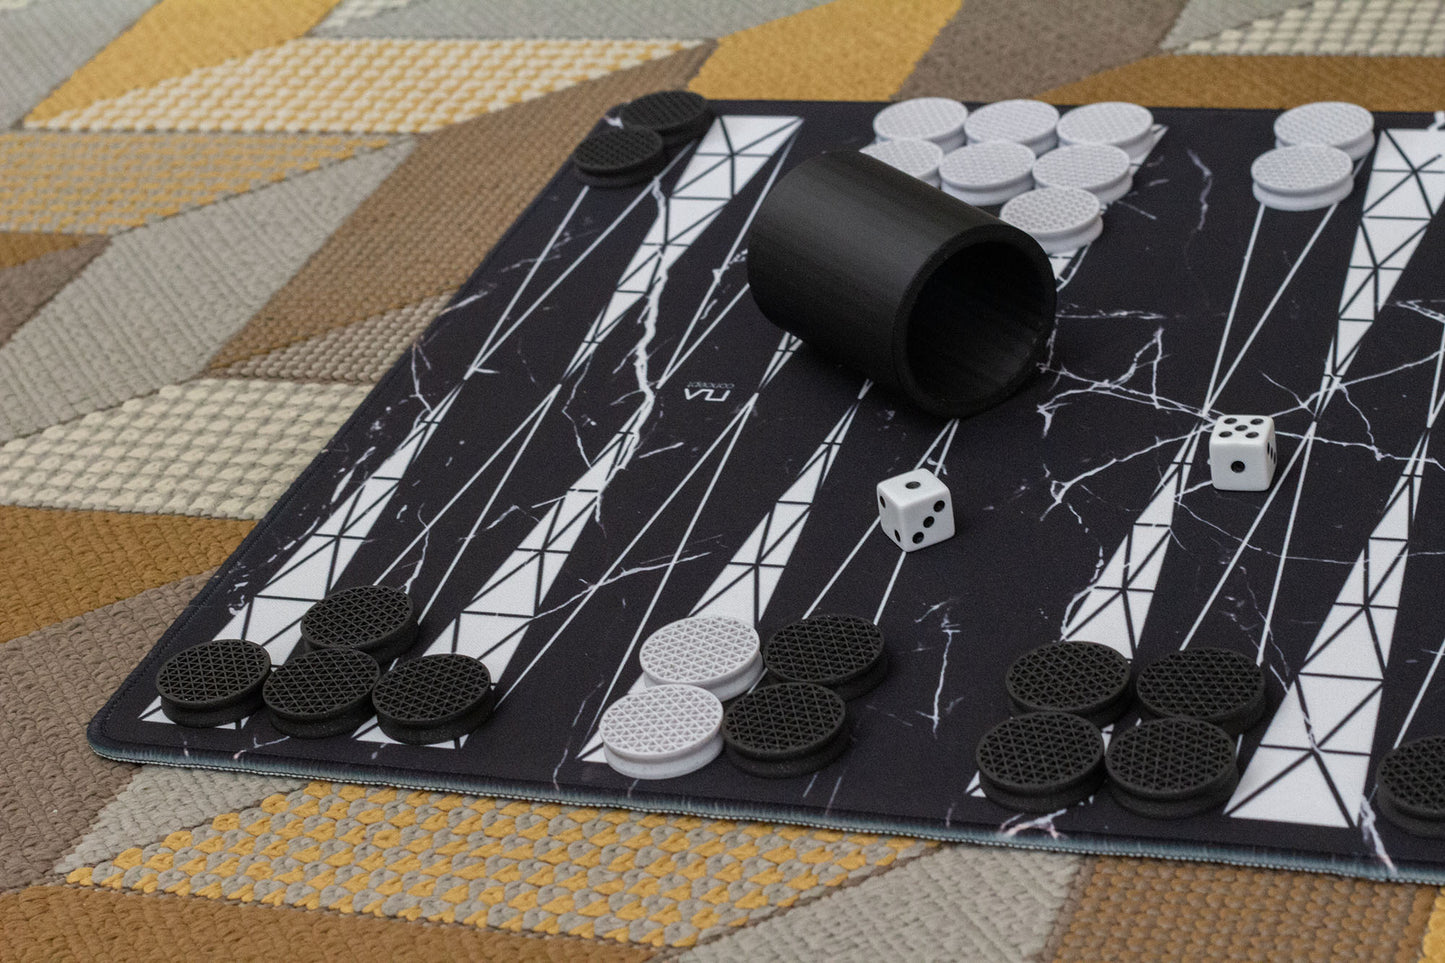 Roll-Up Backgammon Set